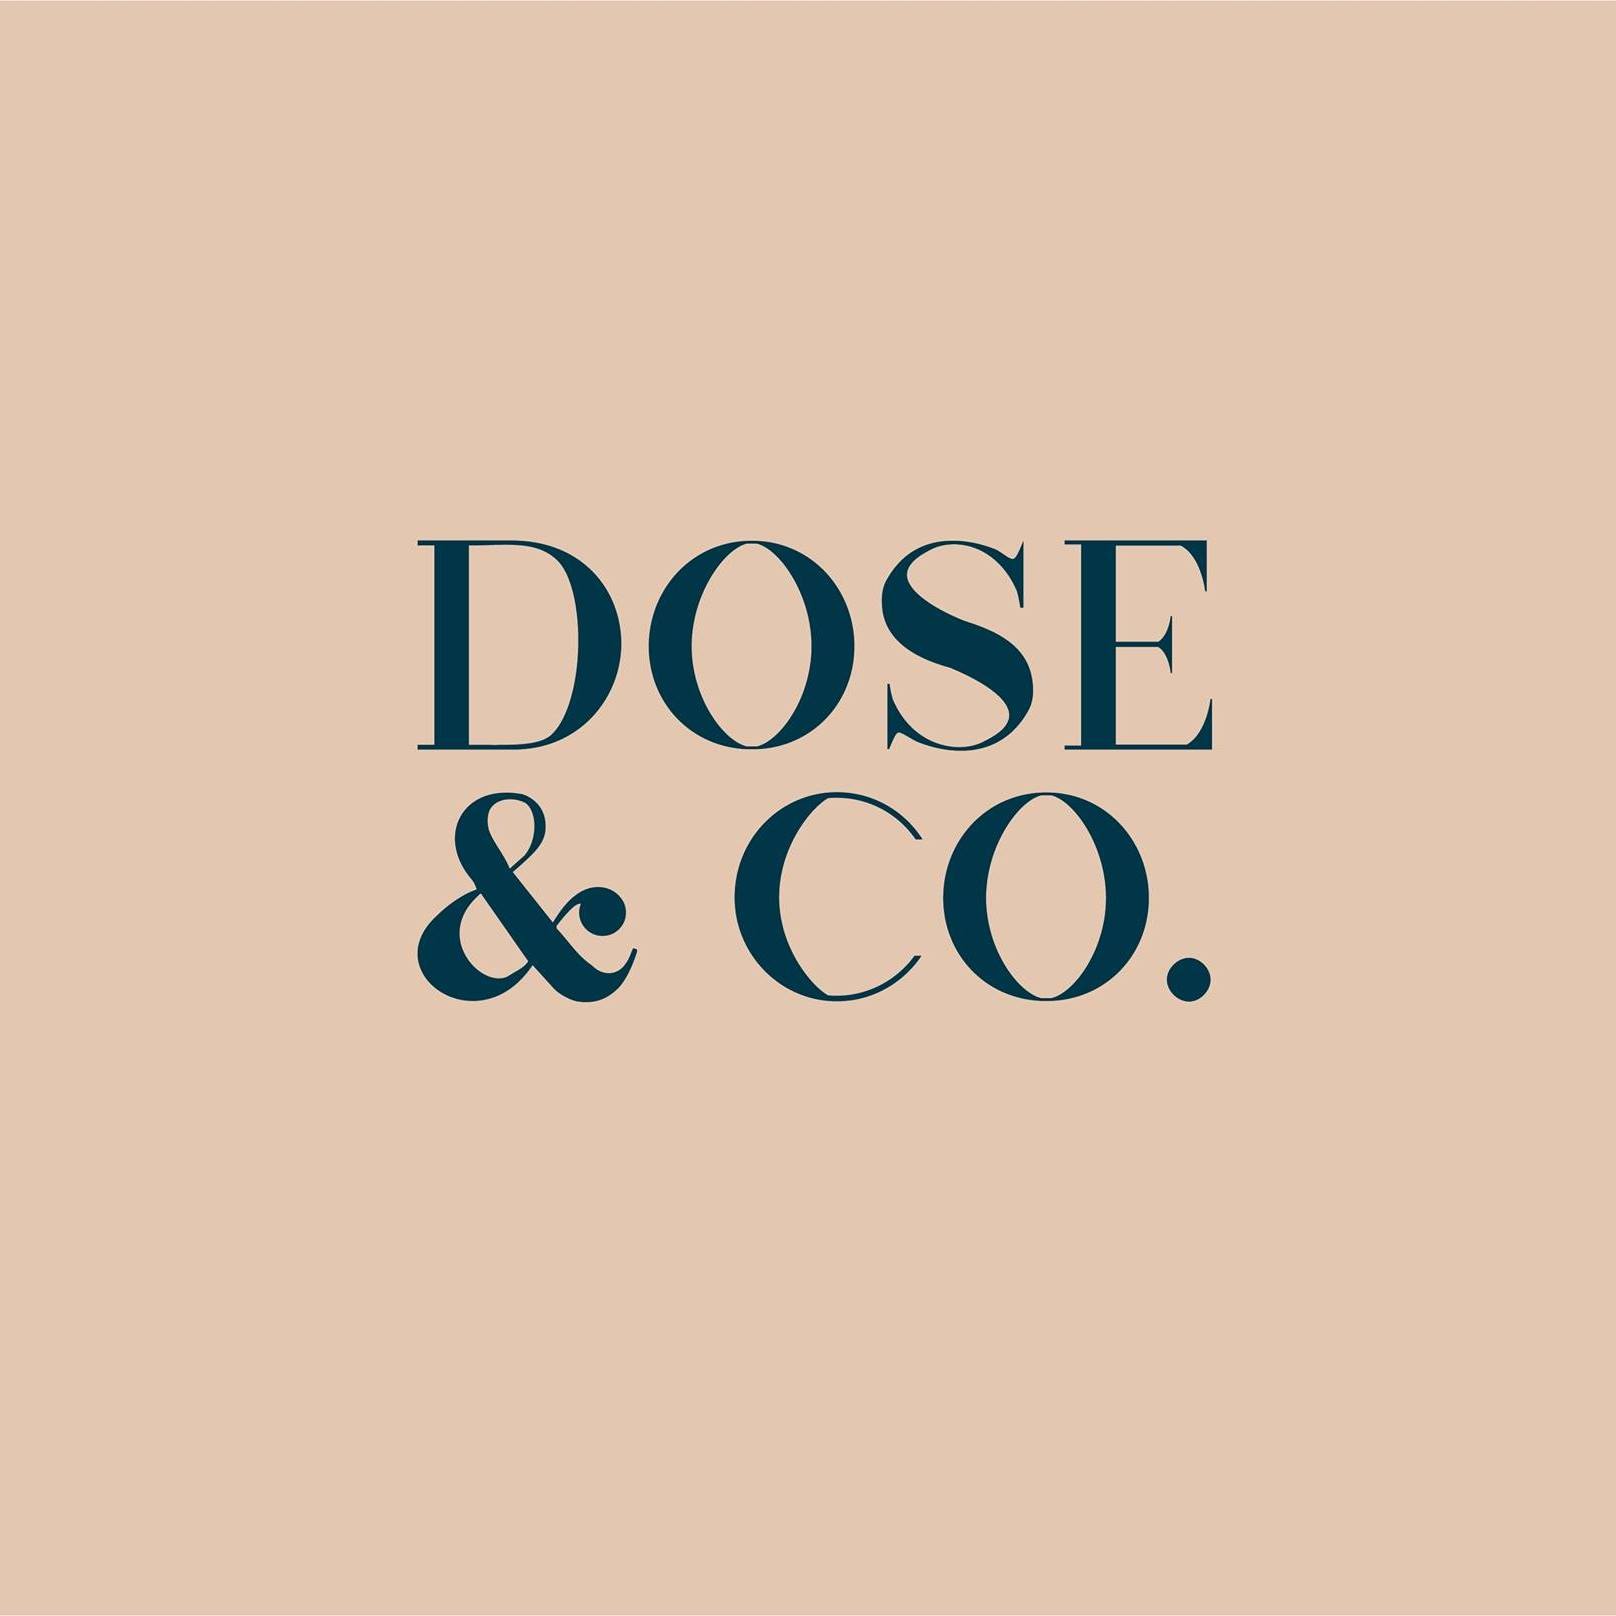 Dose & Co